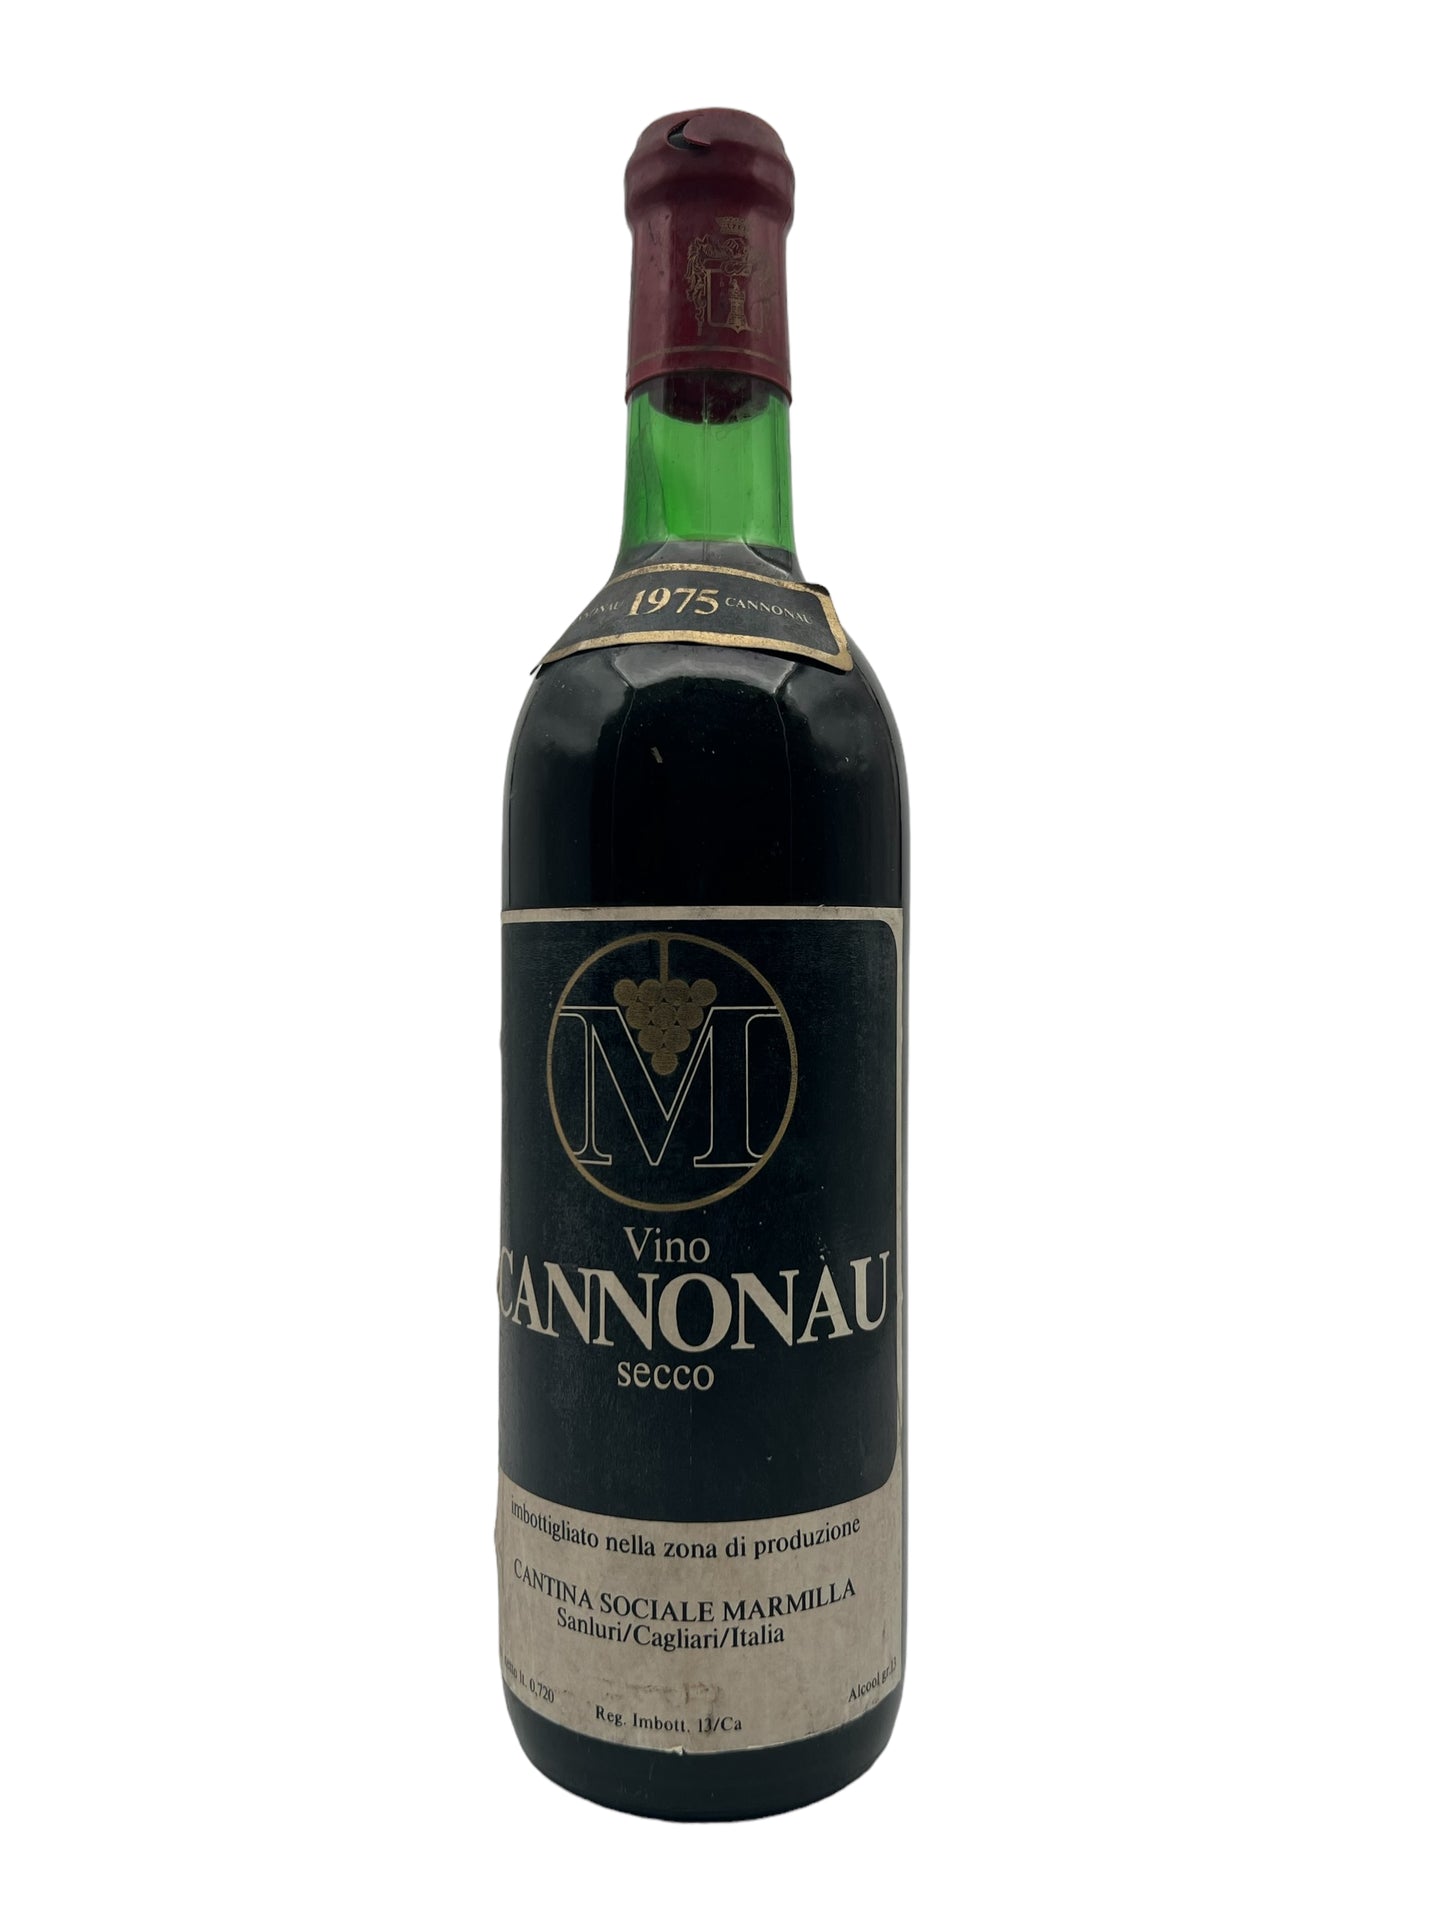 Cannonau 1975